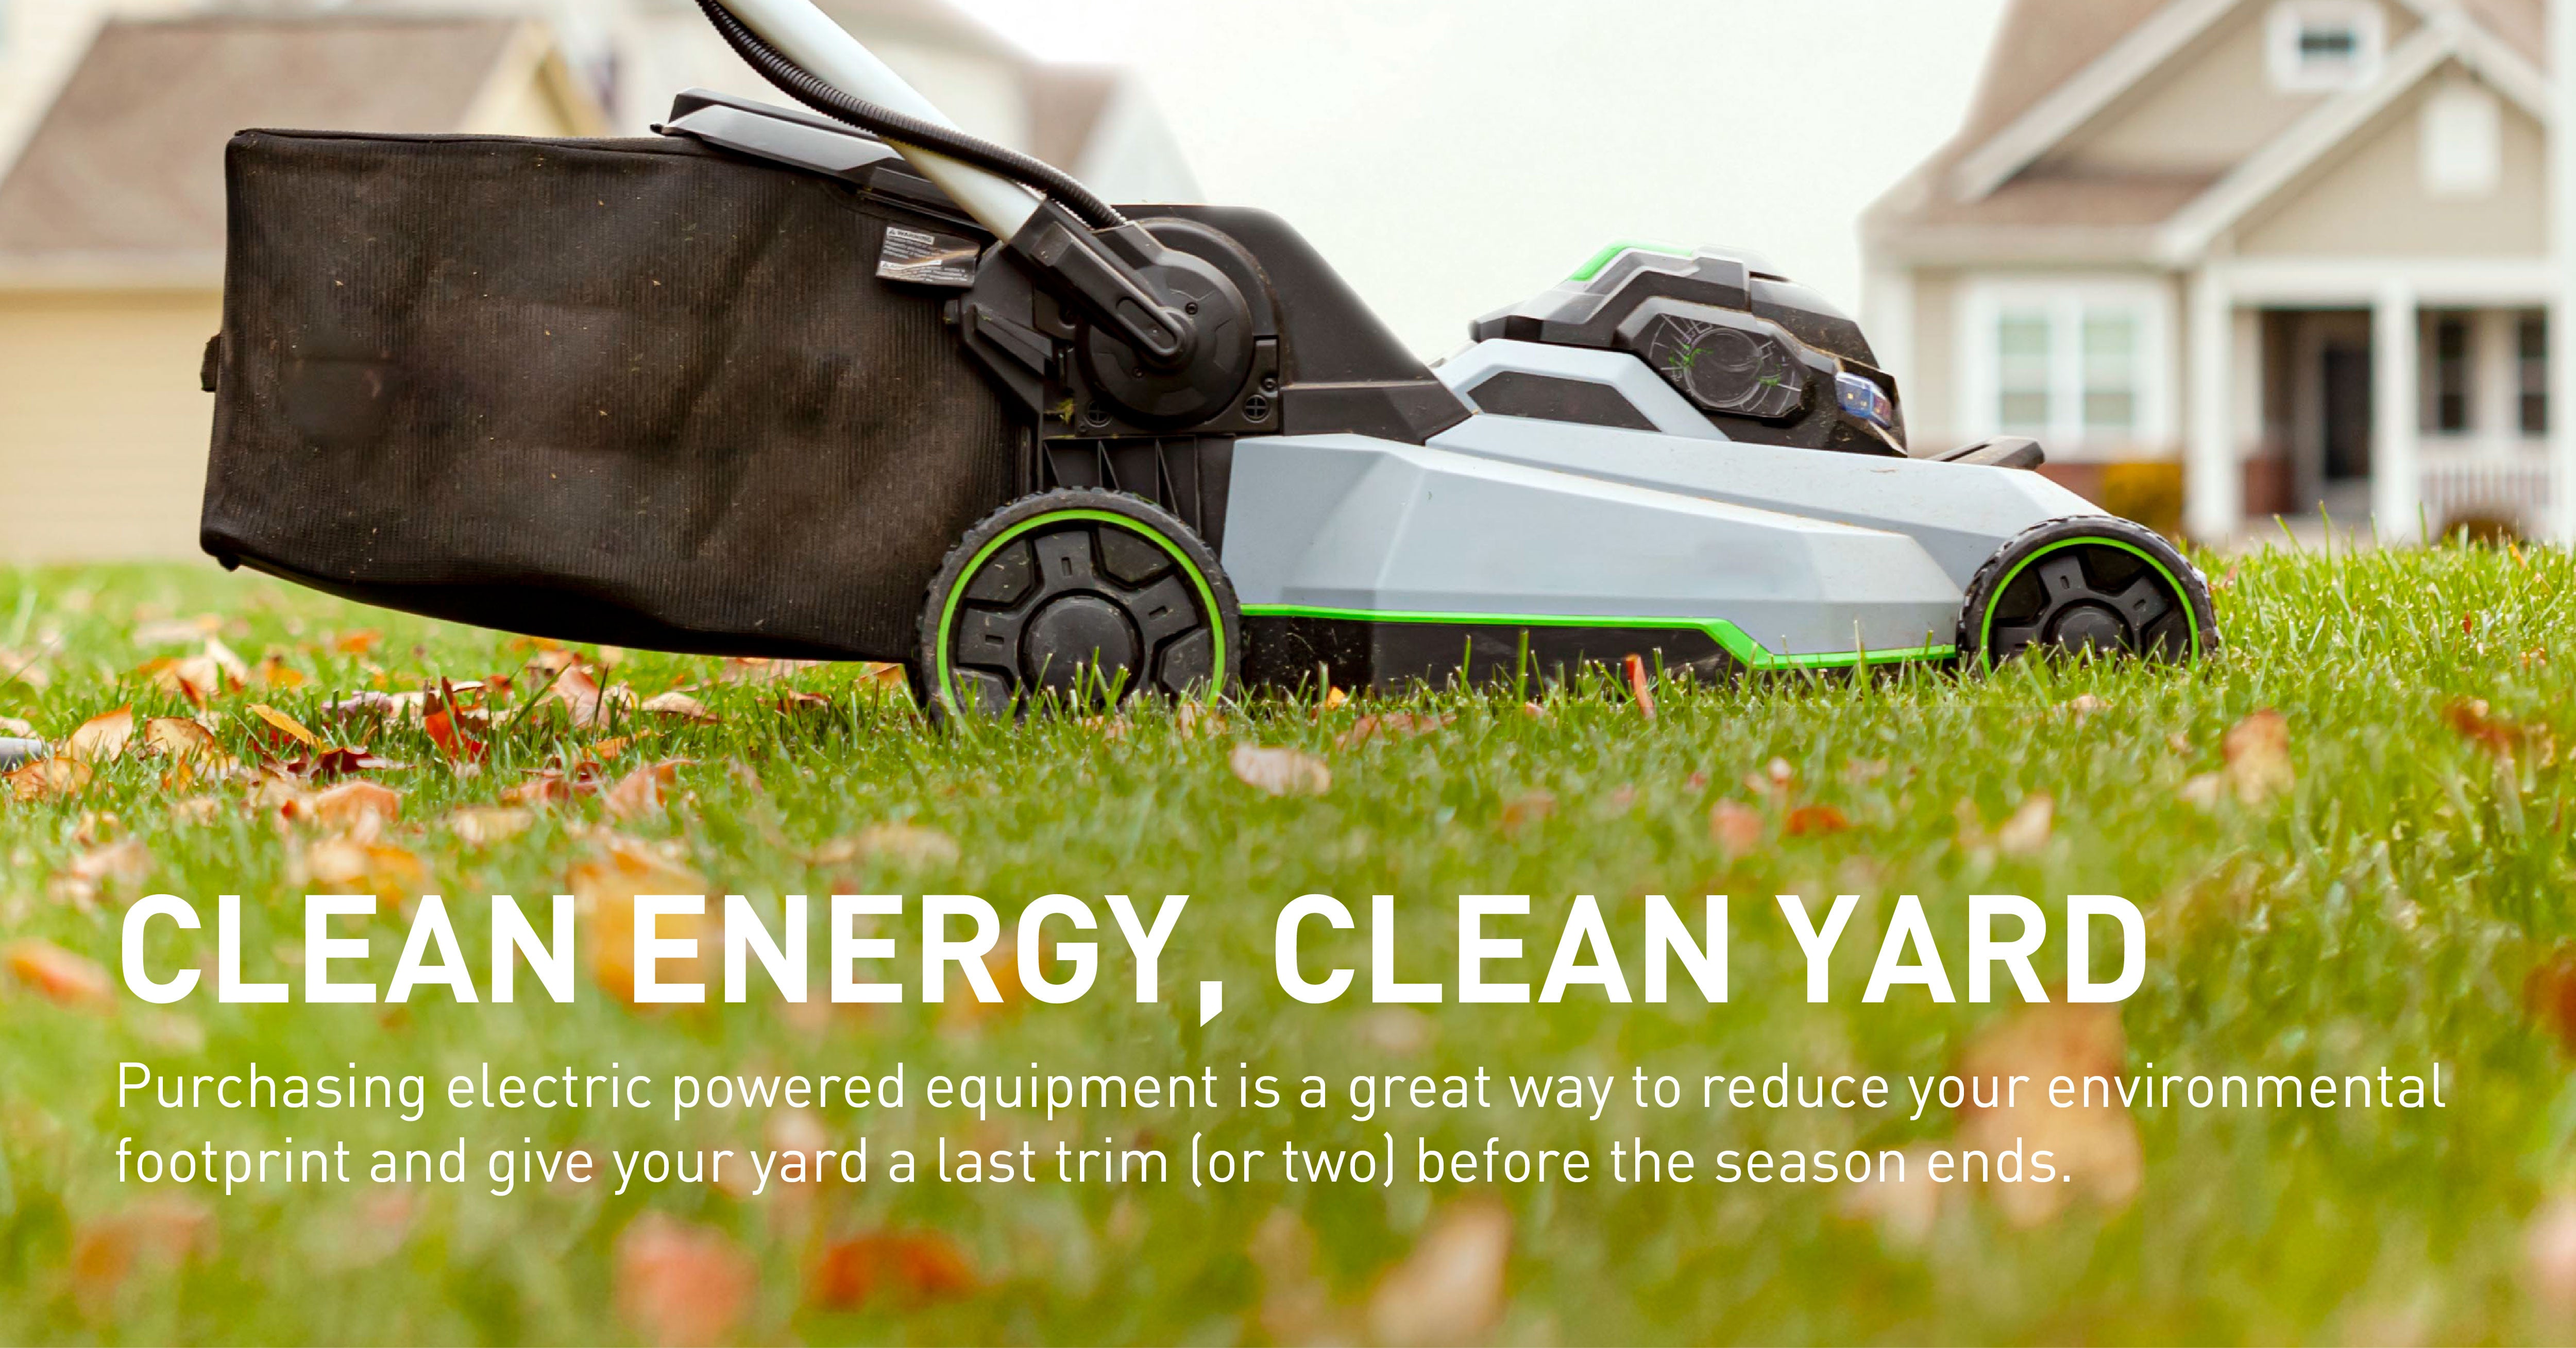 electric lawn mowers clean energy 